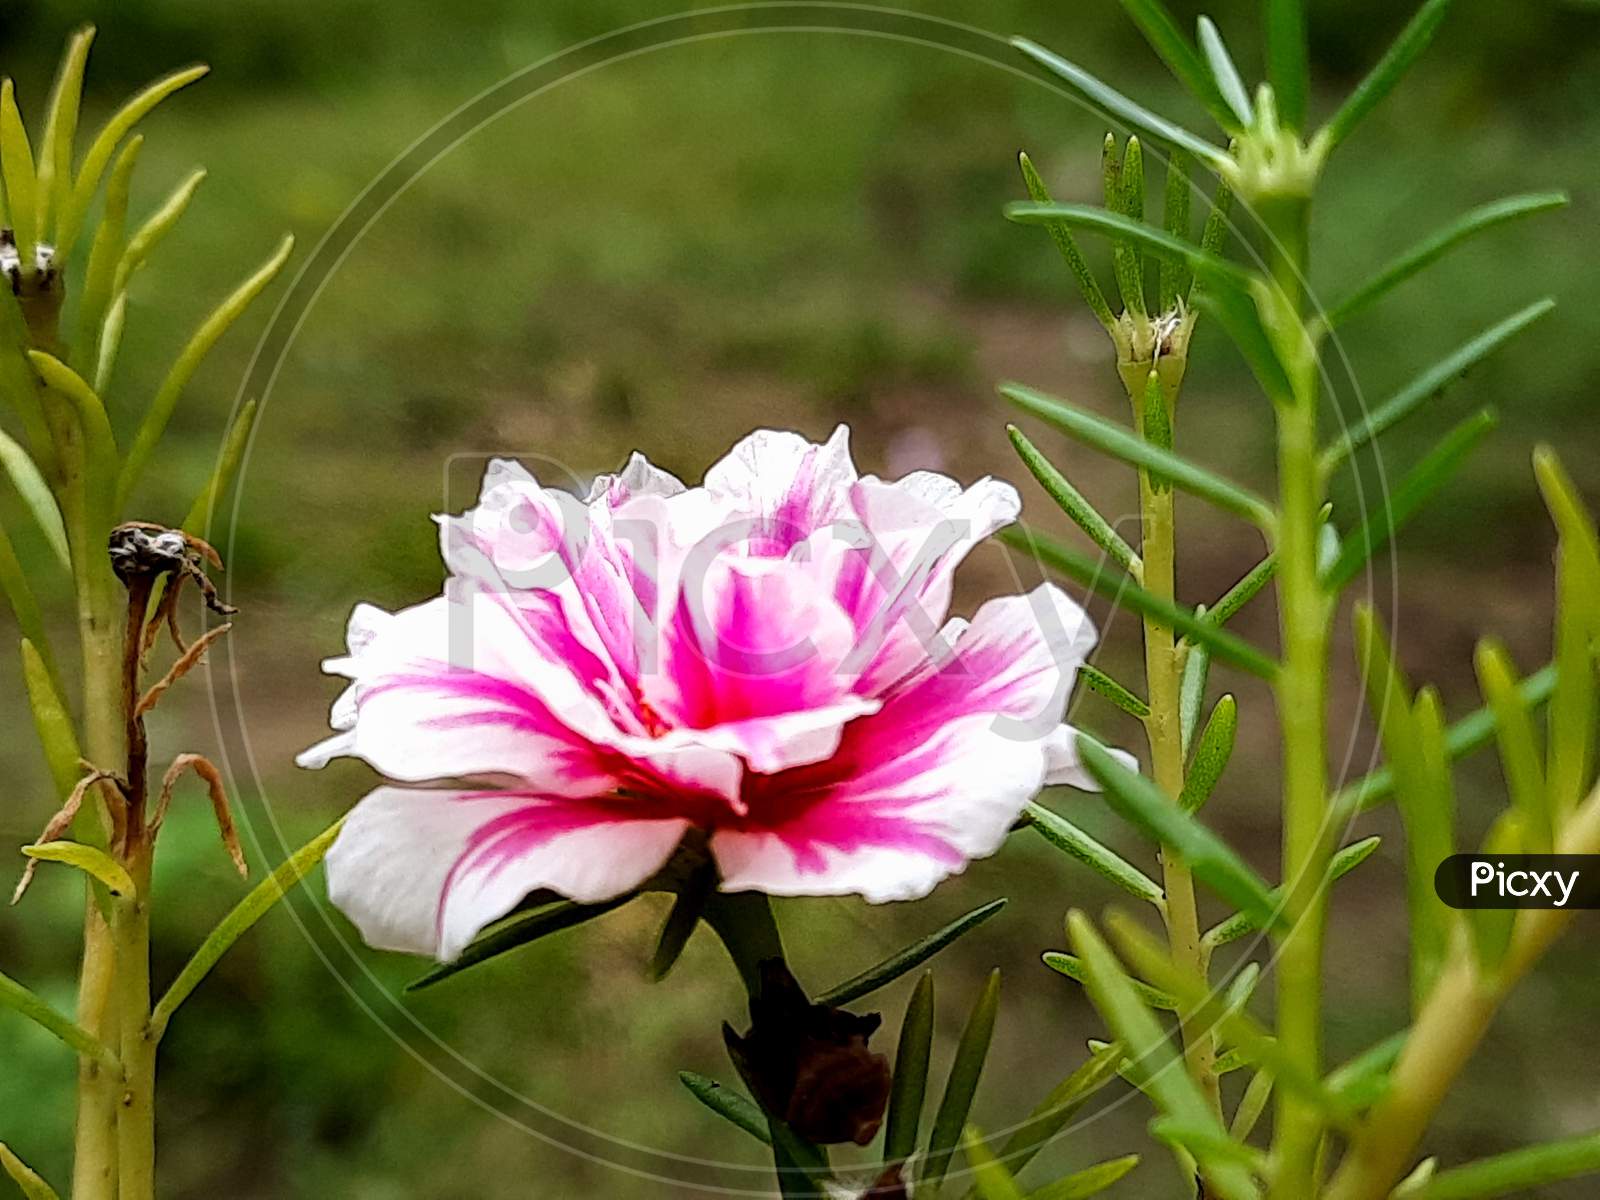 Image Of 10 O Clock Flower Bi Picxy